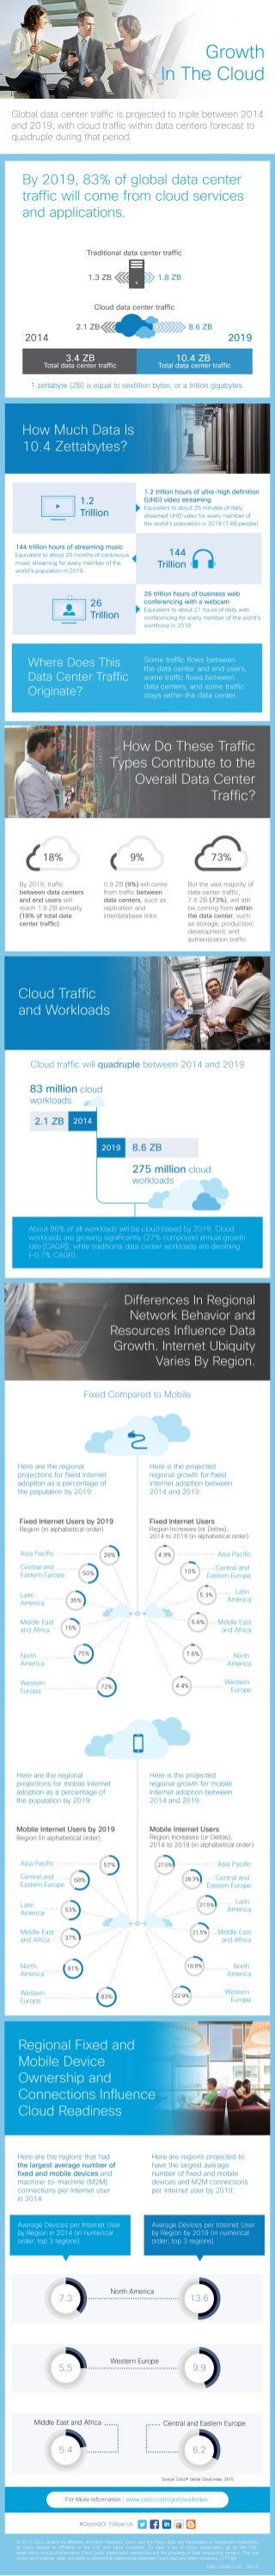 Infographic: Cisco Global Cloud Index, 2014–2019